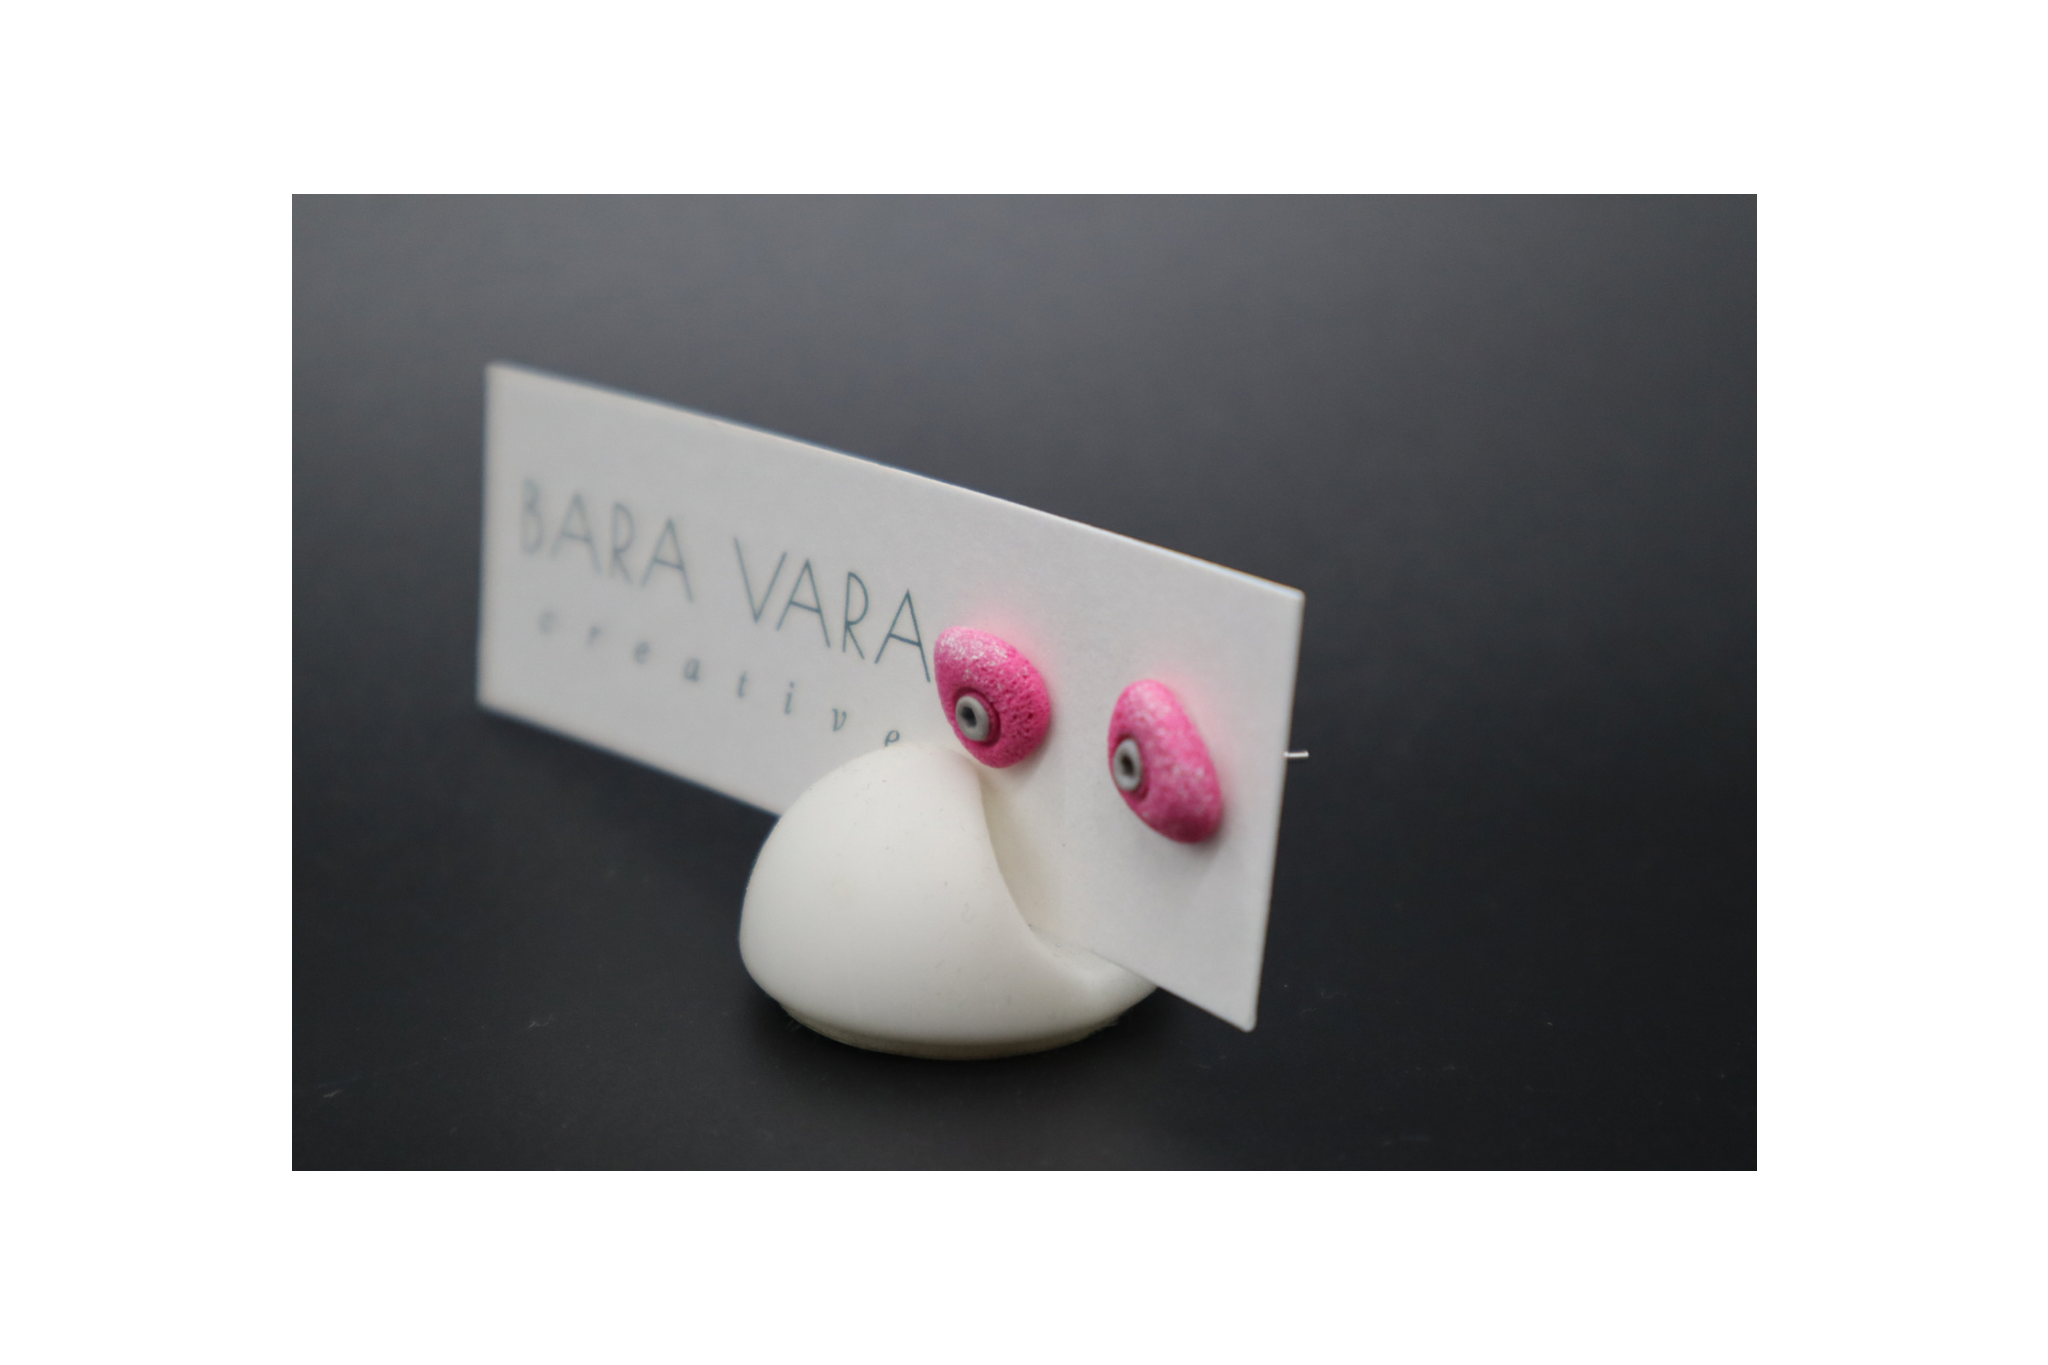 Bara Vara Creative Climbing Hold Earrings - Pink Crimp - Happy Biner